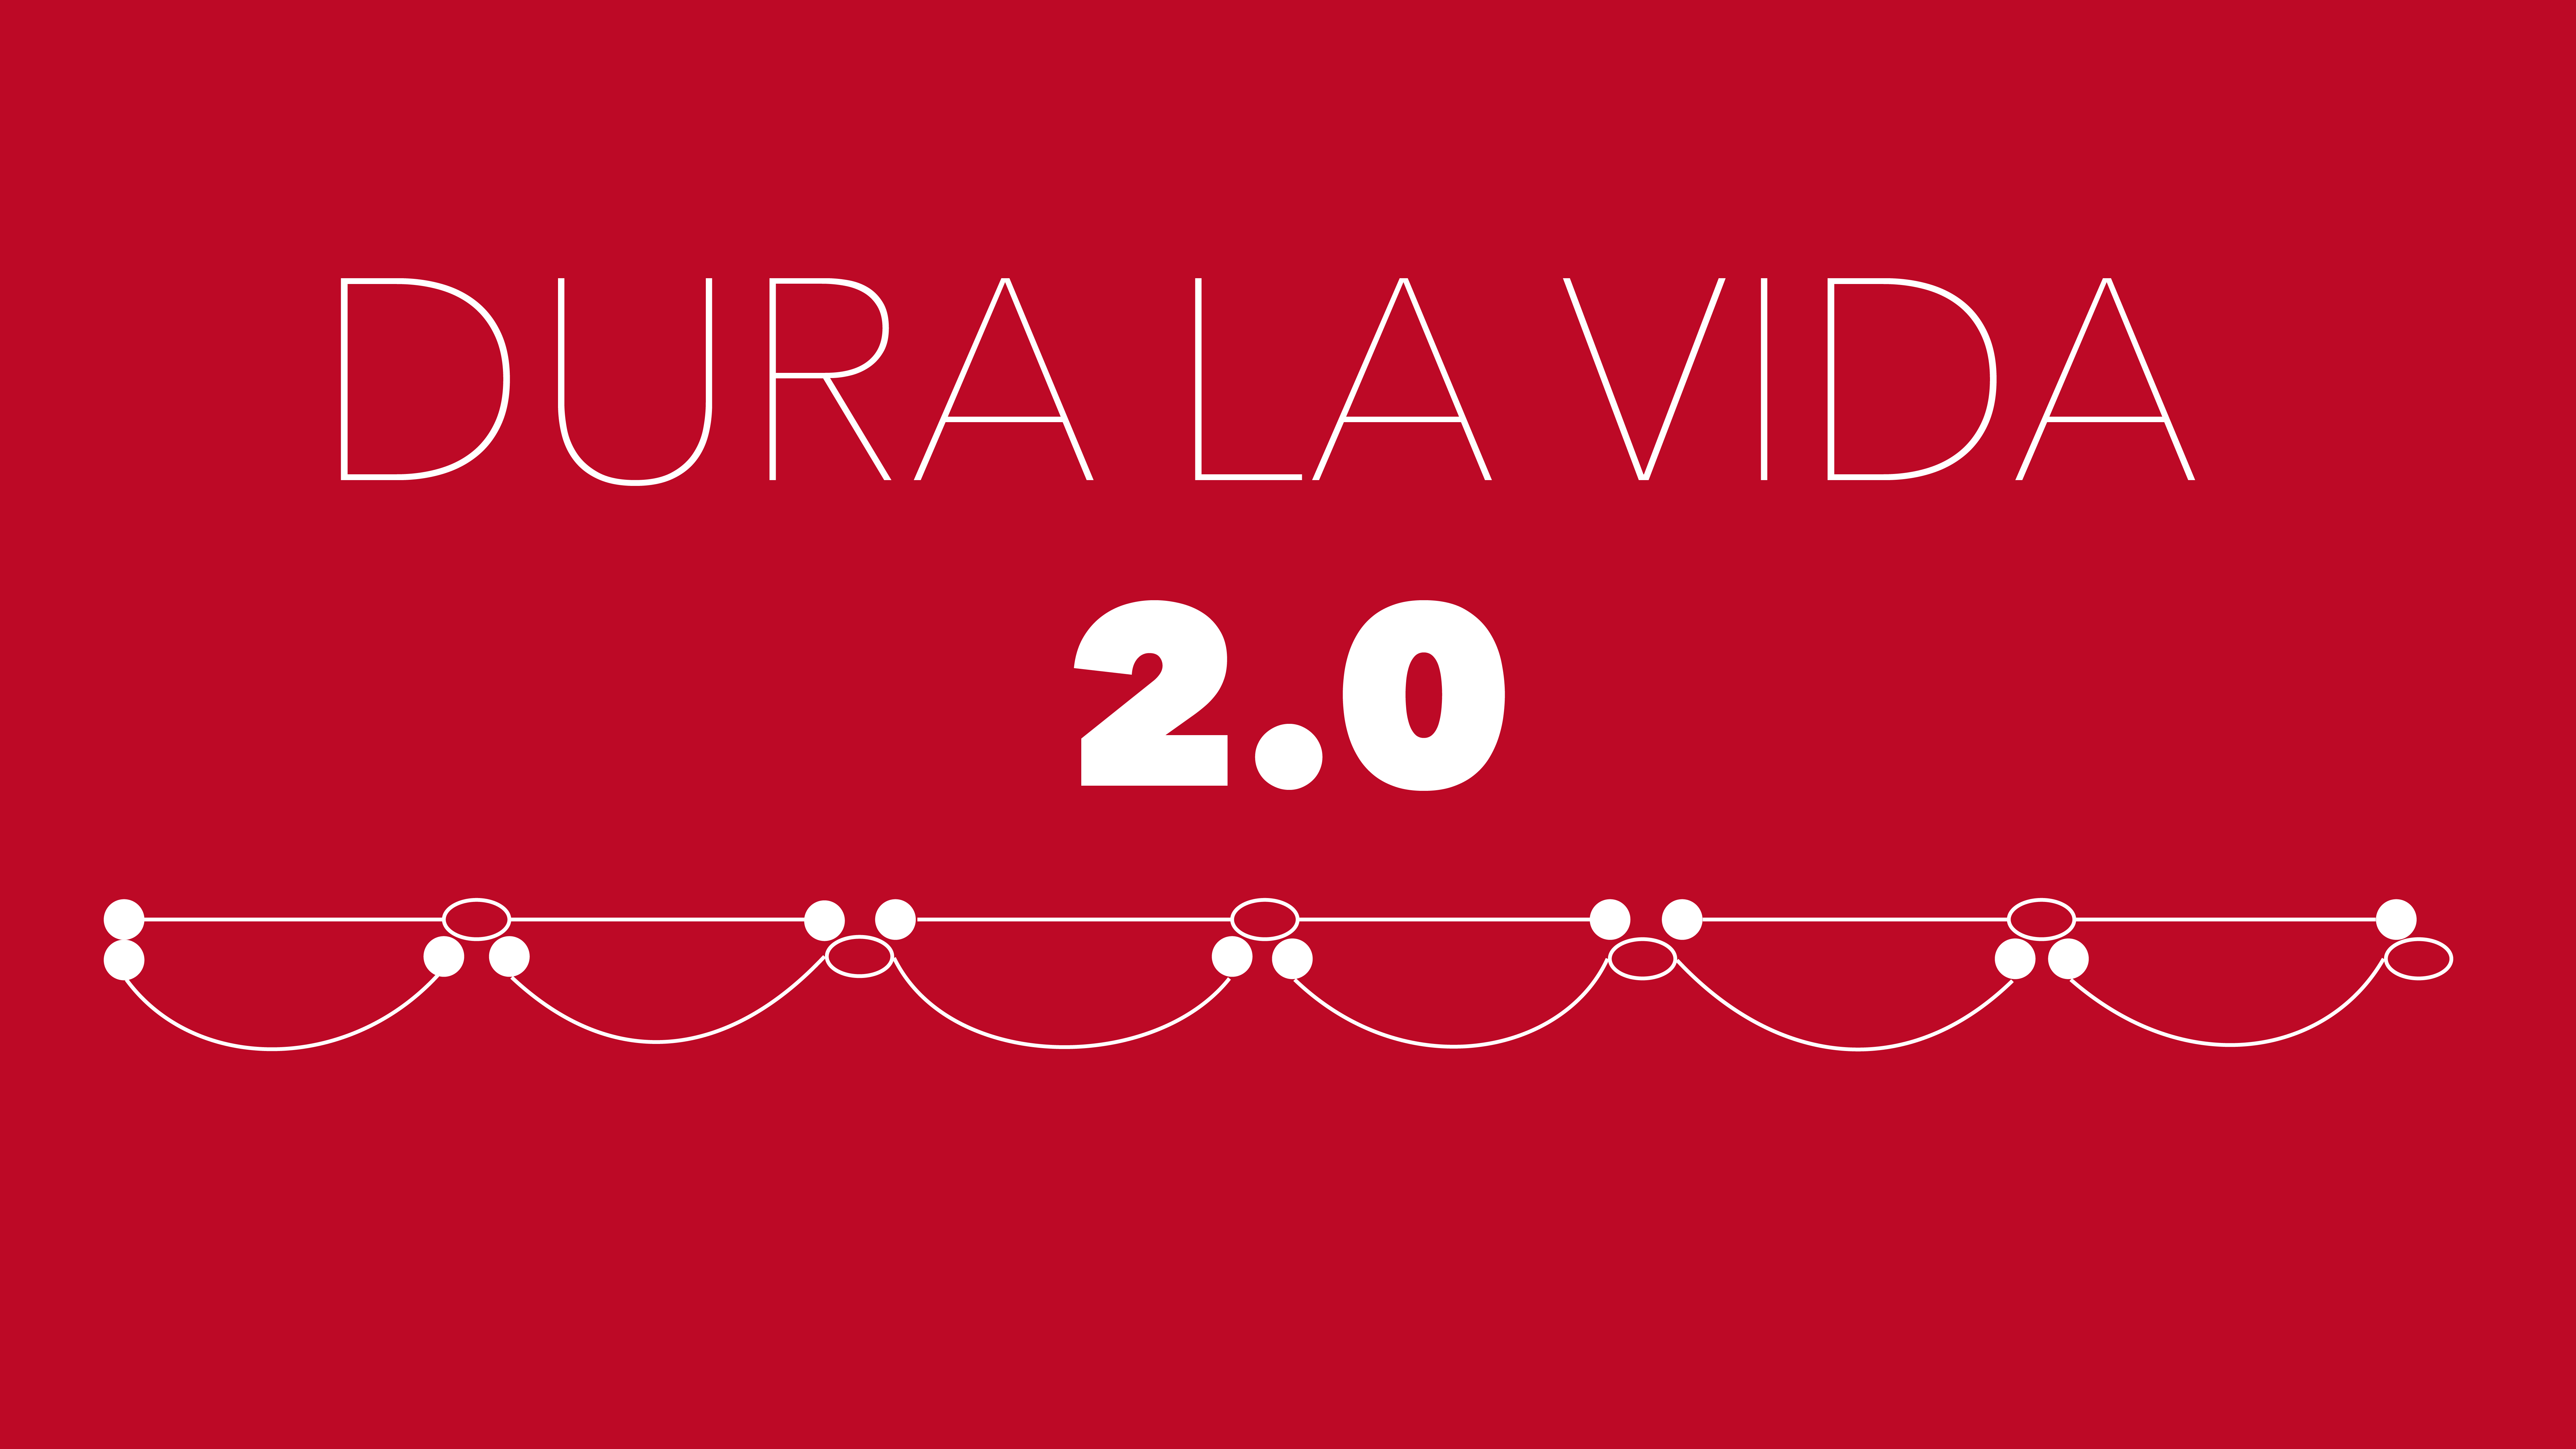 DuraLaVida 2.0 - the next generation split highline design